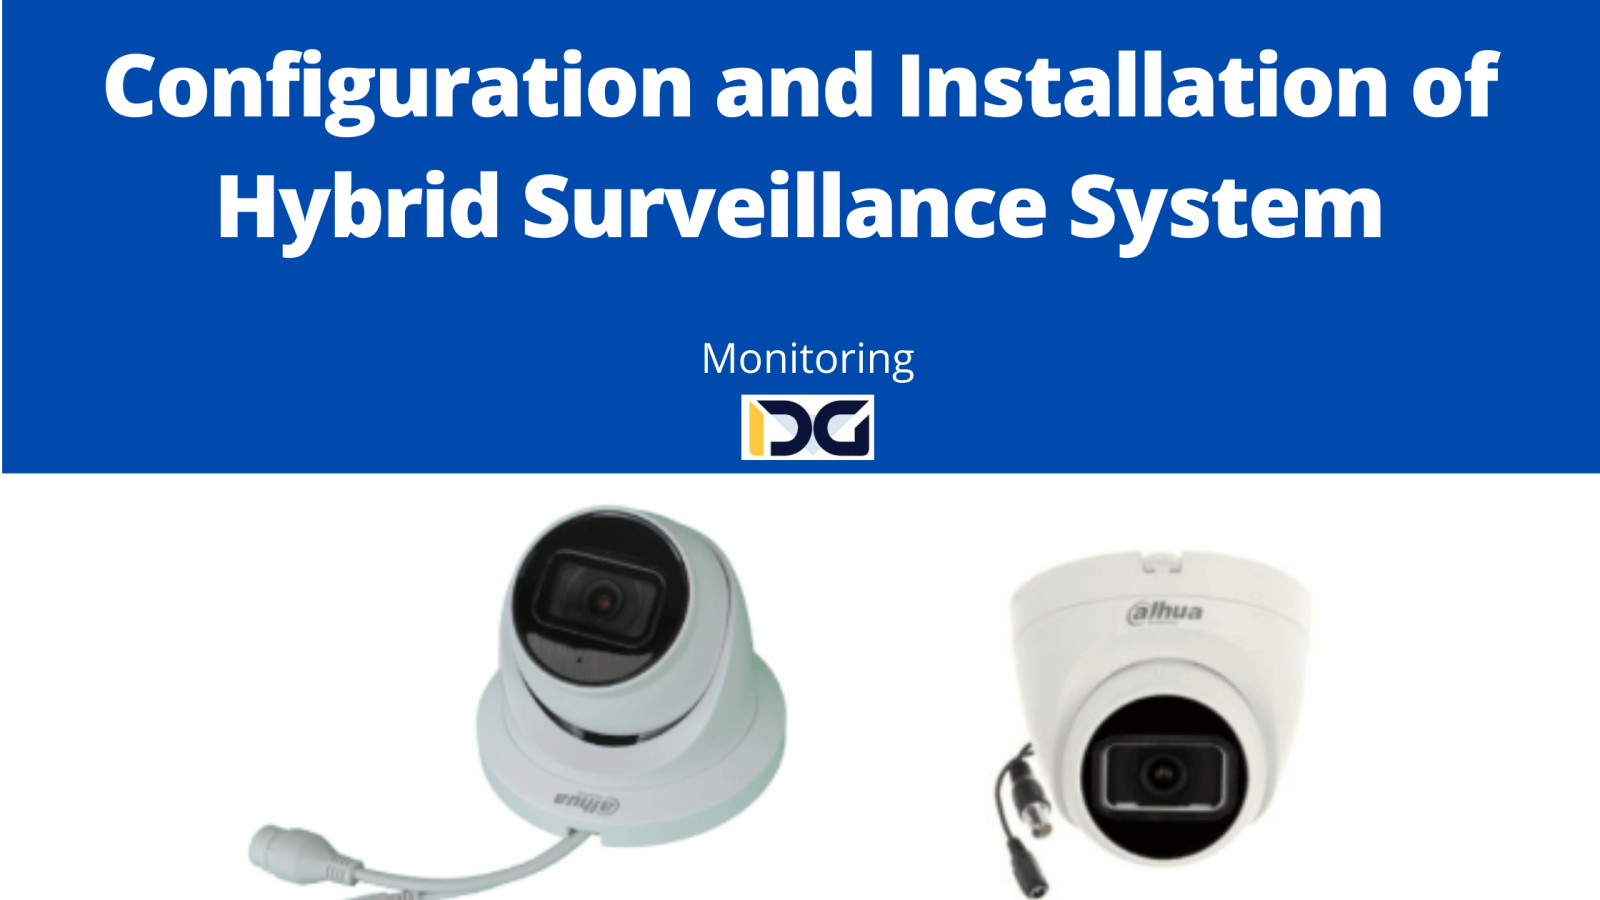 Configuration and Installation of Hybrid Surveillance System